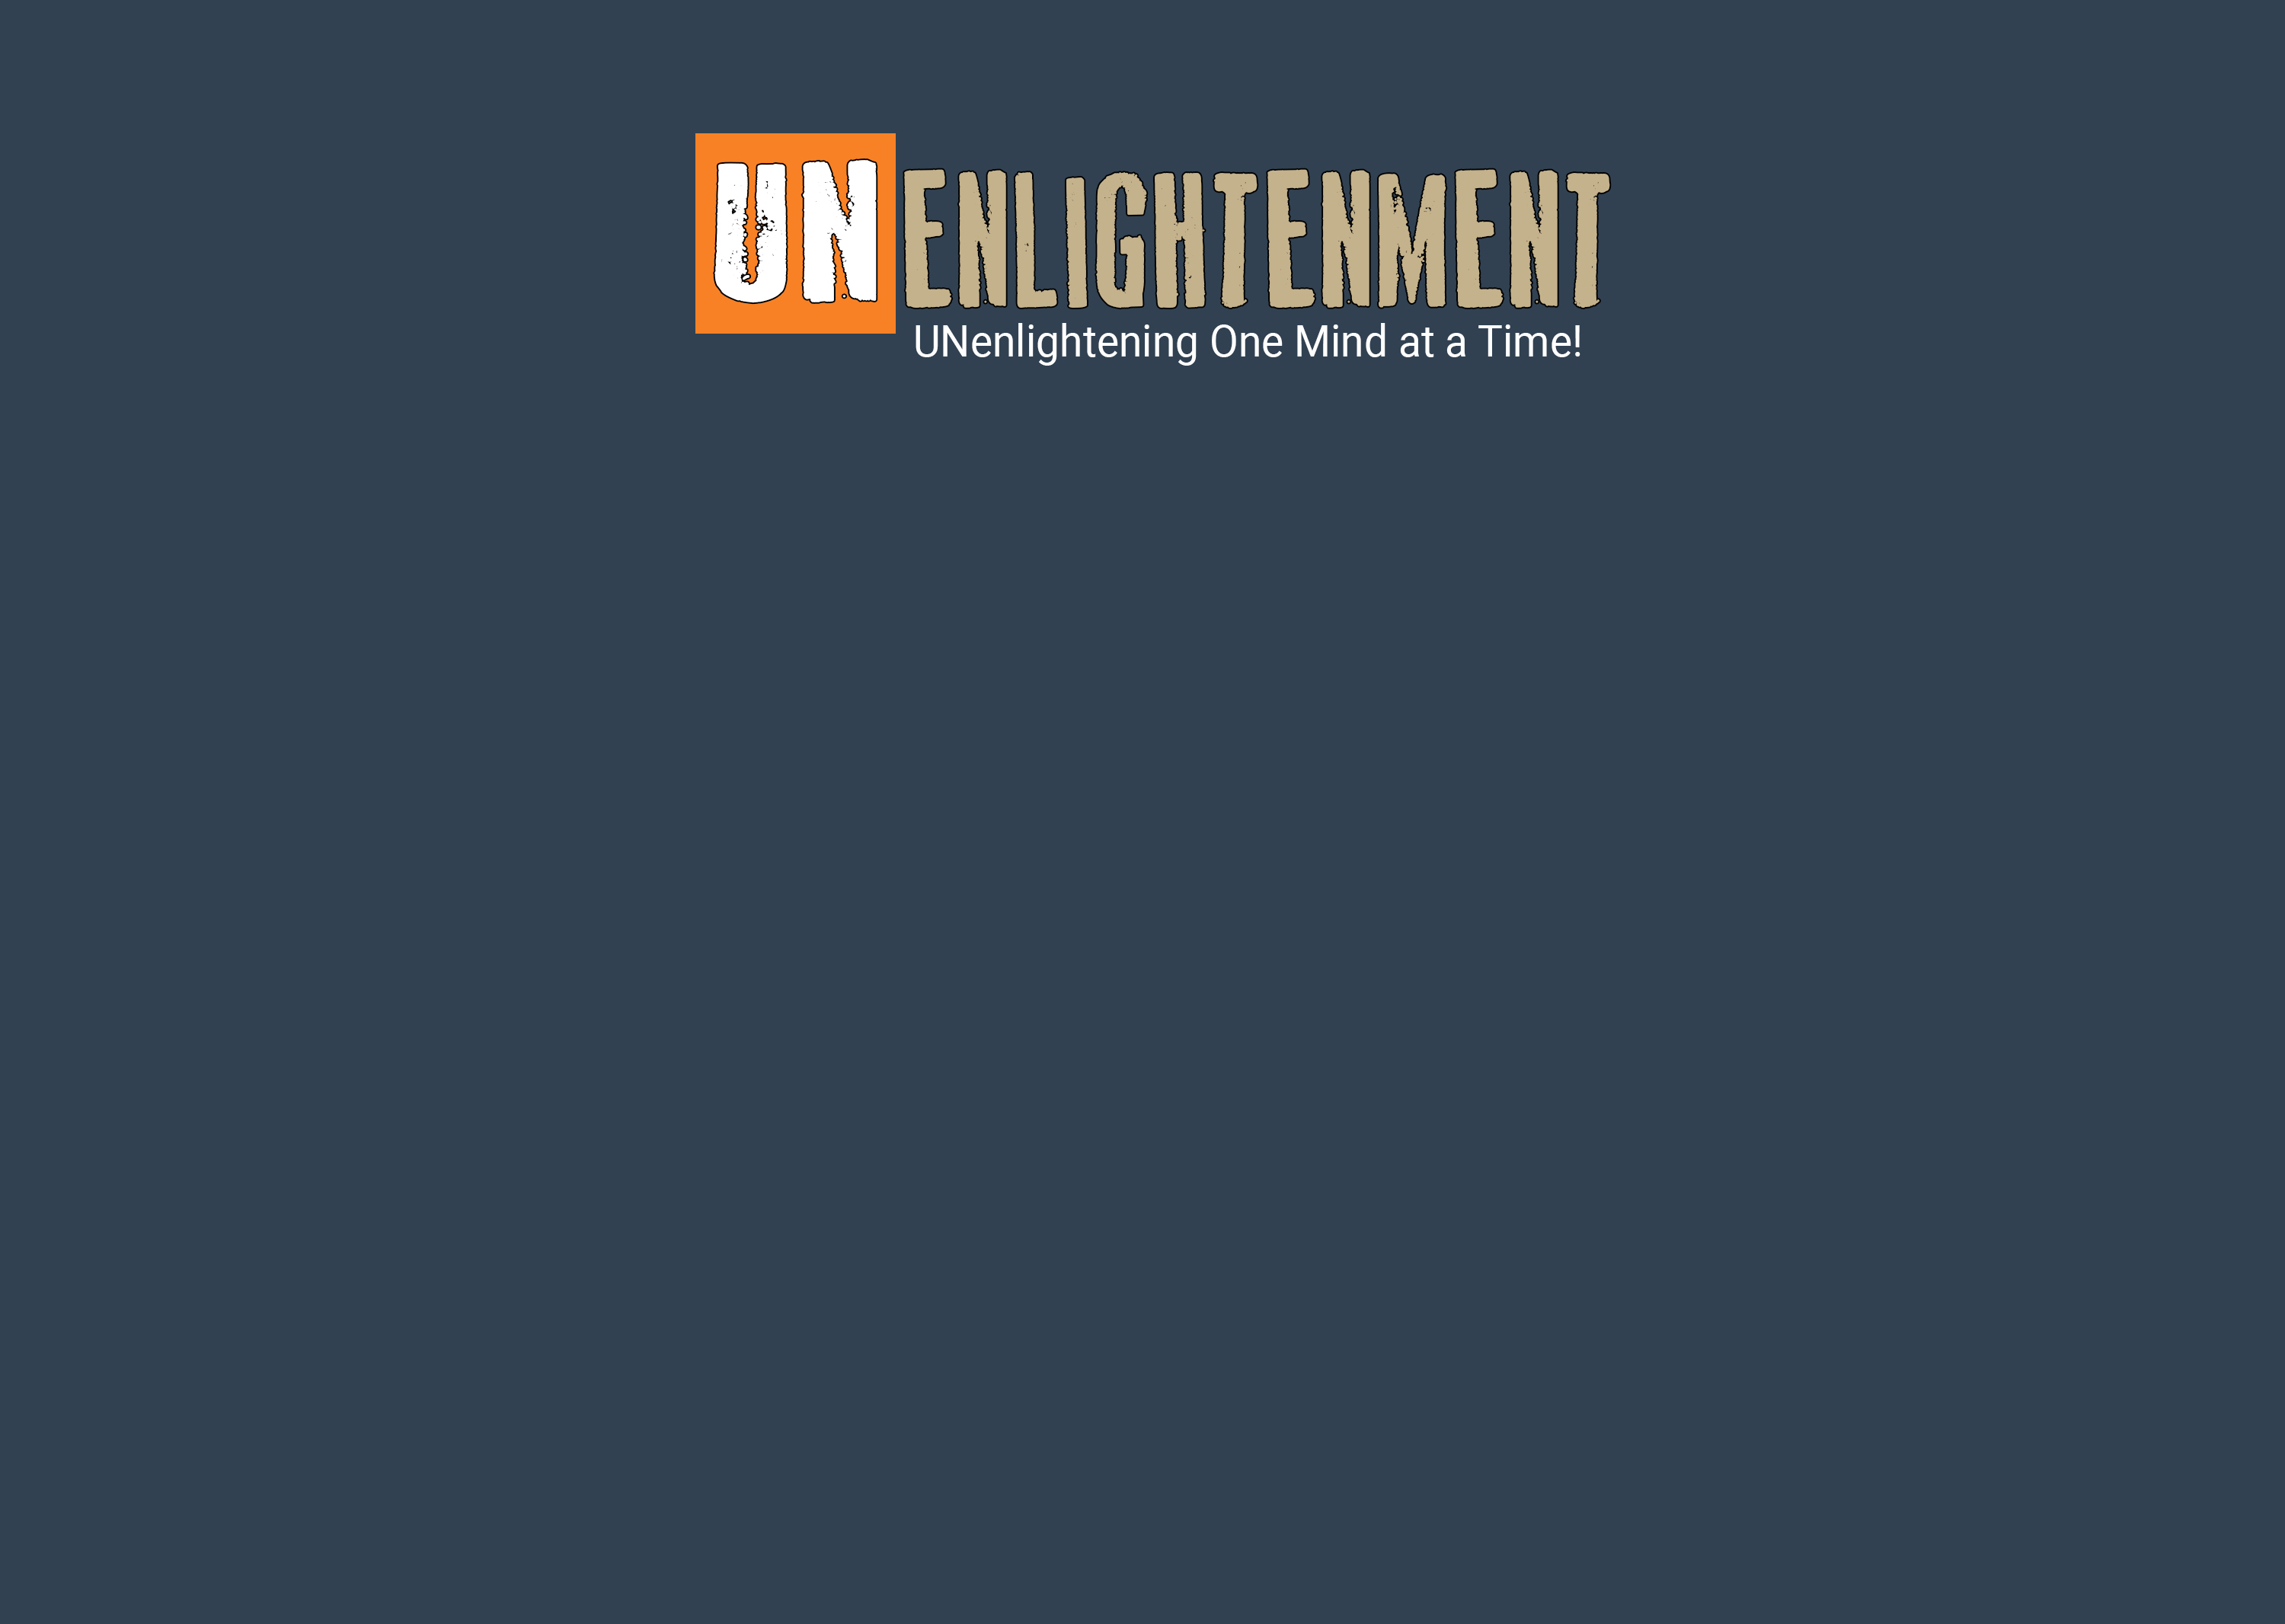 UNenlightenment